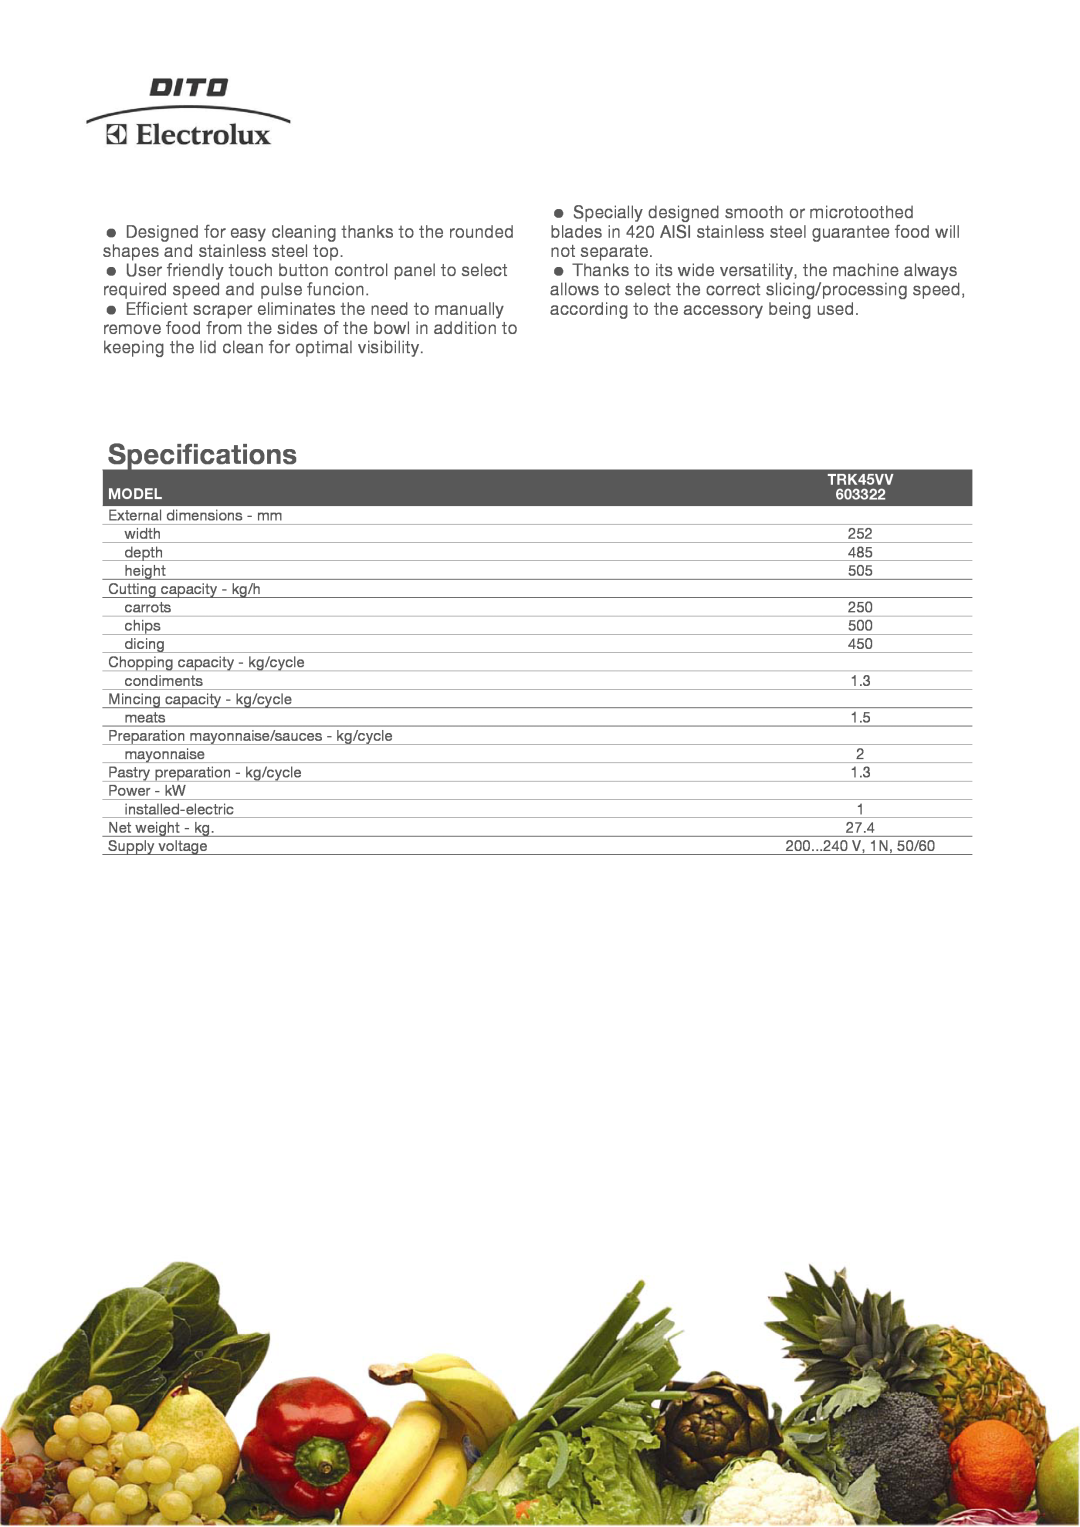 Electrolux TRK45VV manual Specifications, Model, 603322 